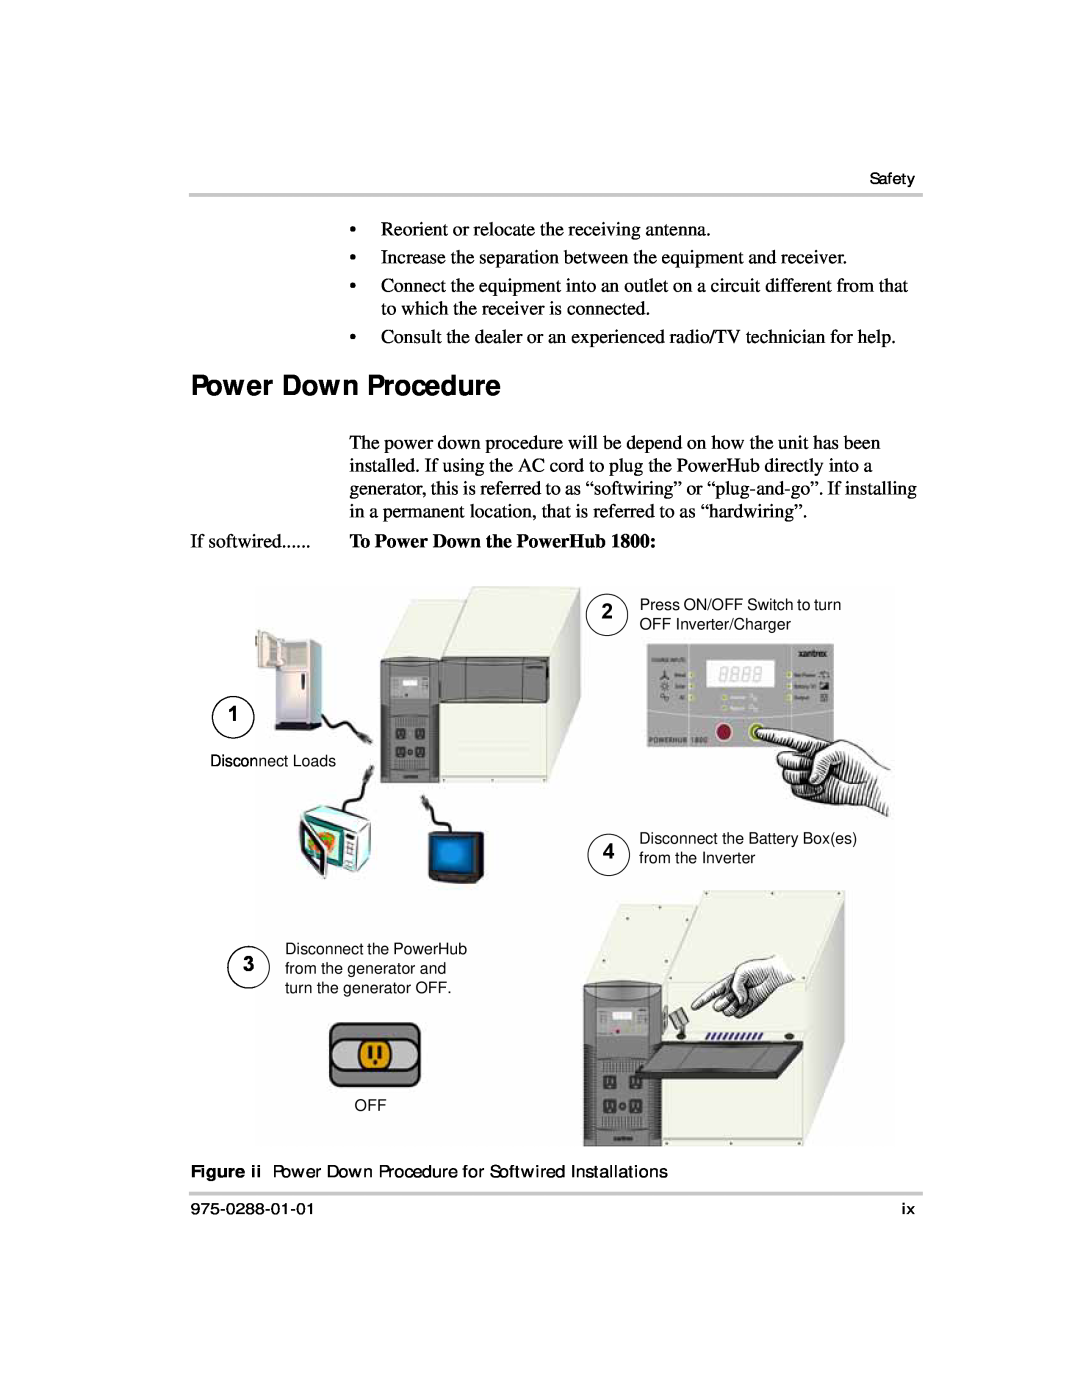 Xantrex Technology PH1800 manual Power Down Procedure, To Power Down the PowerHub 